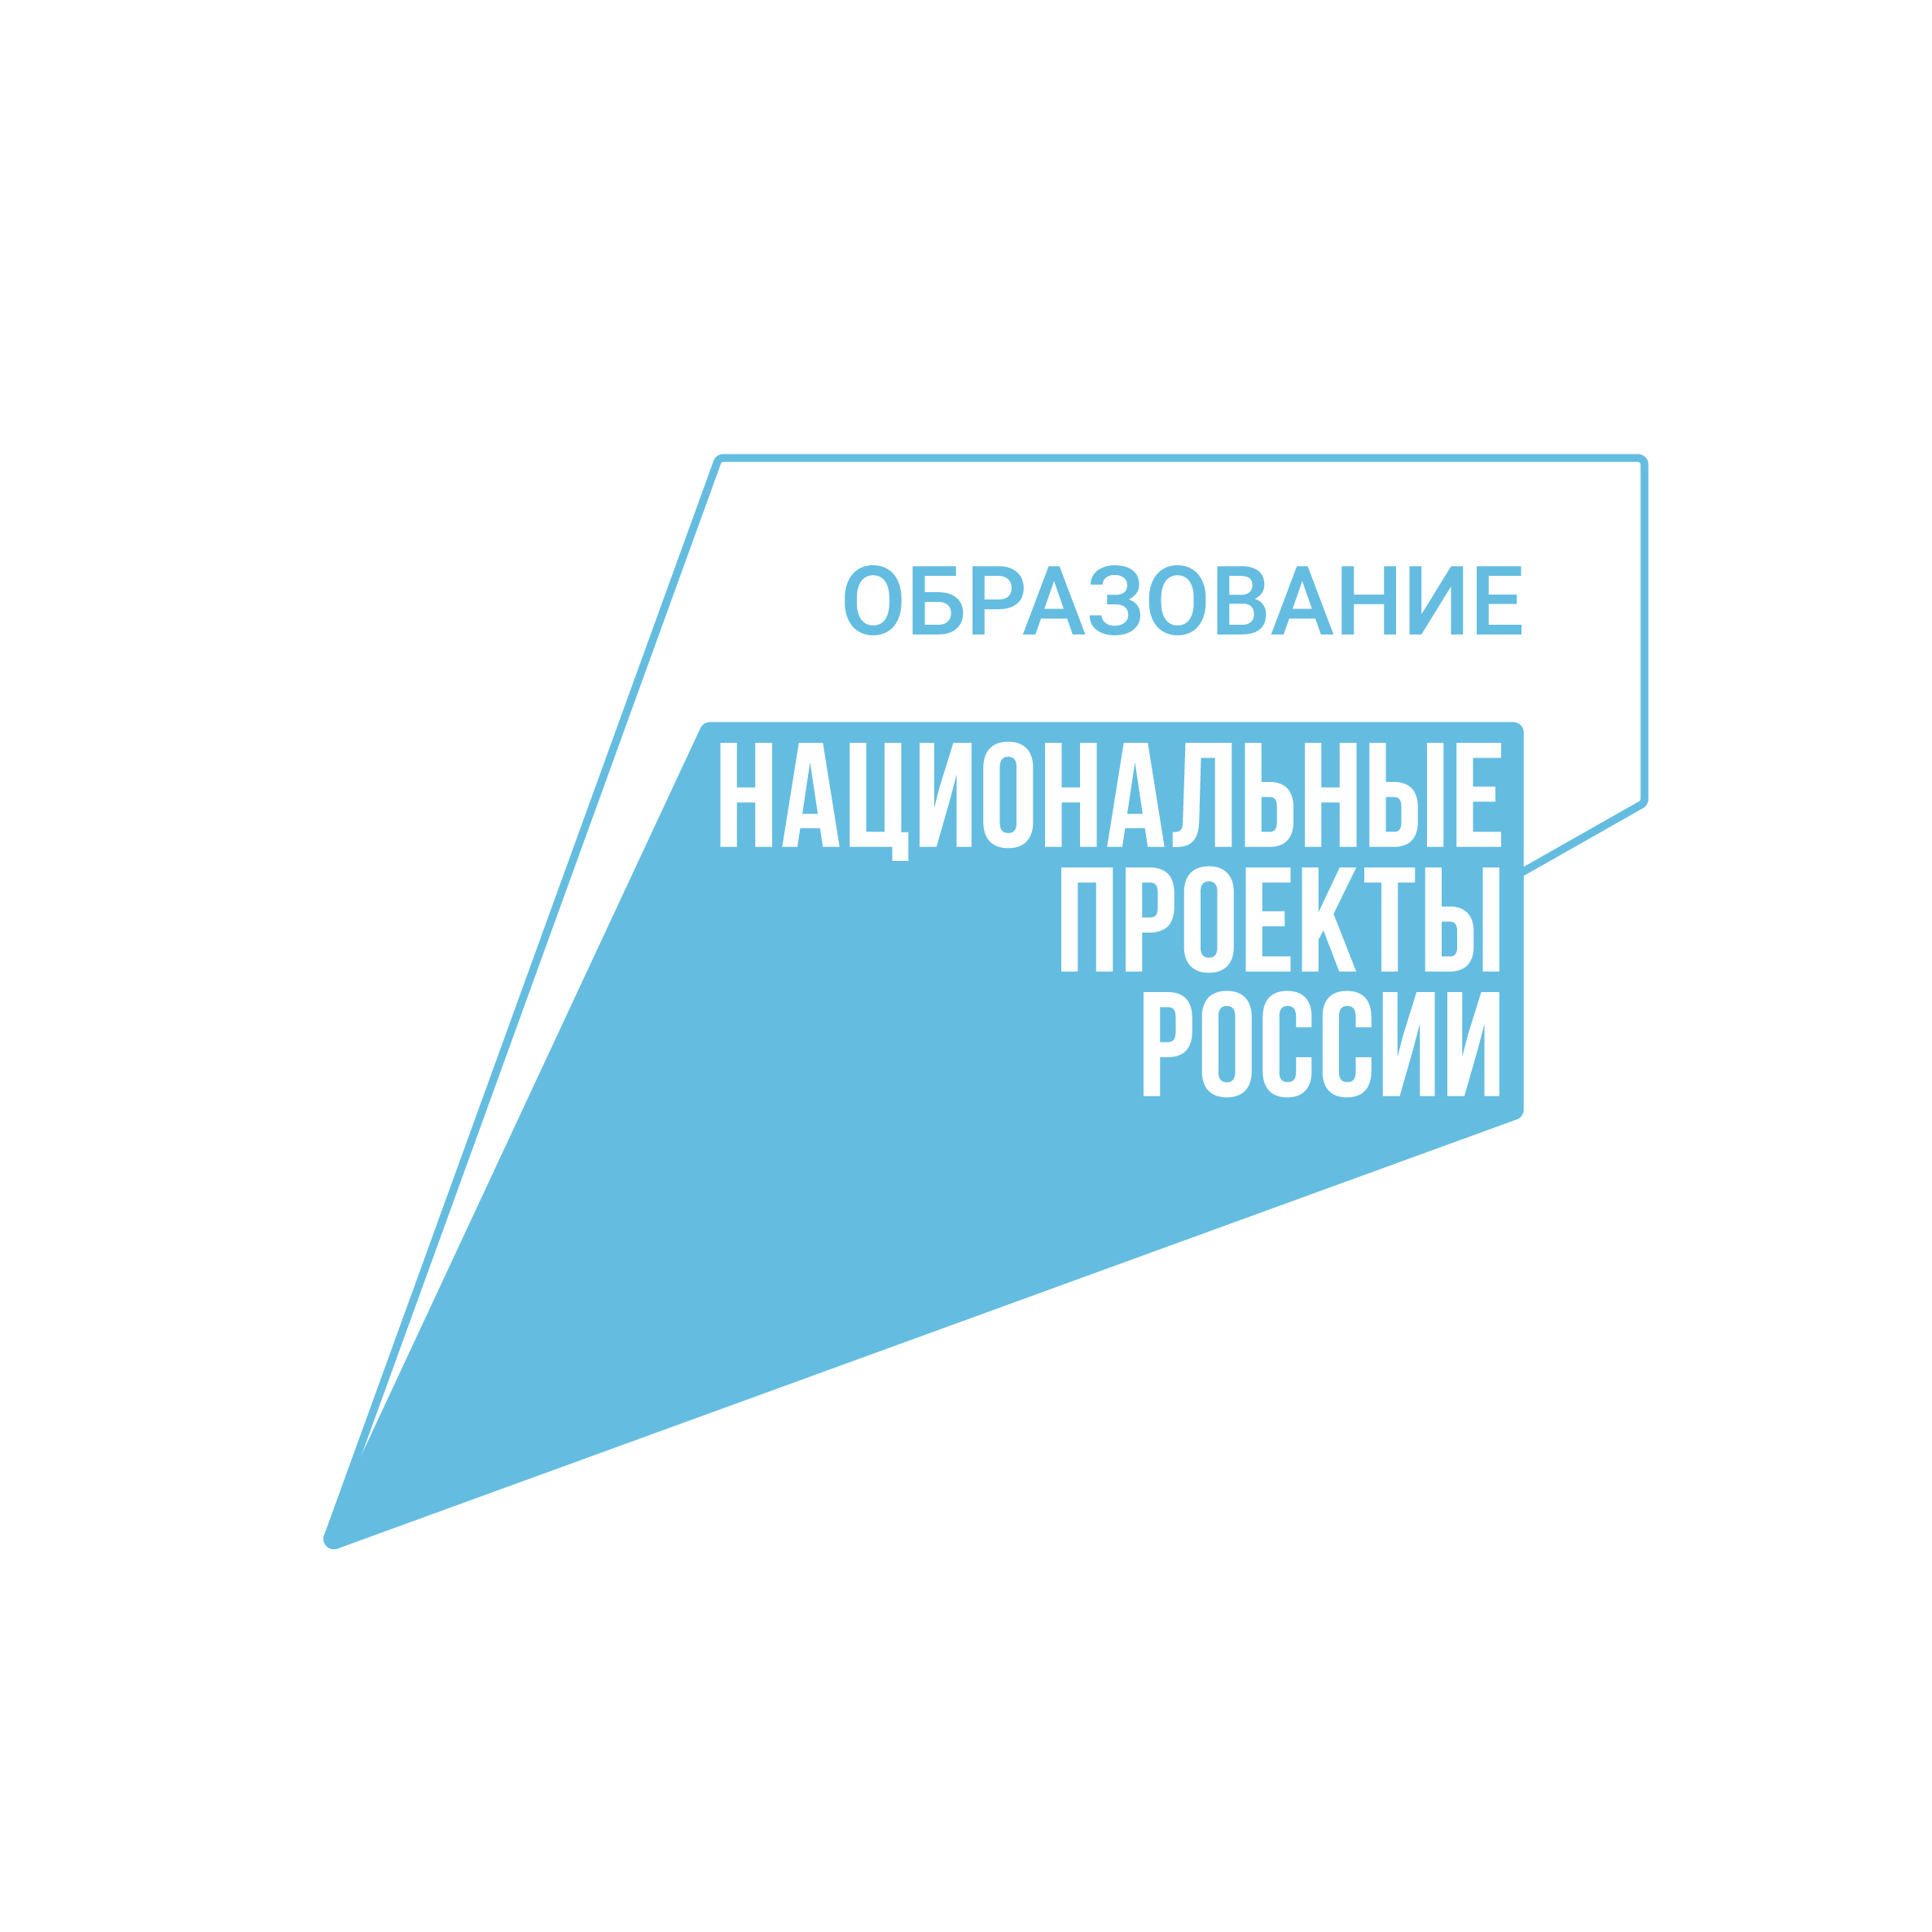 https://tavda-sosh1.edusite.ru/images/obrazovanie_logo_cvet_lev.png